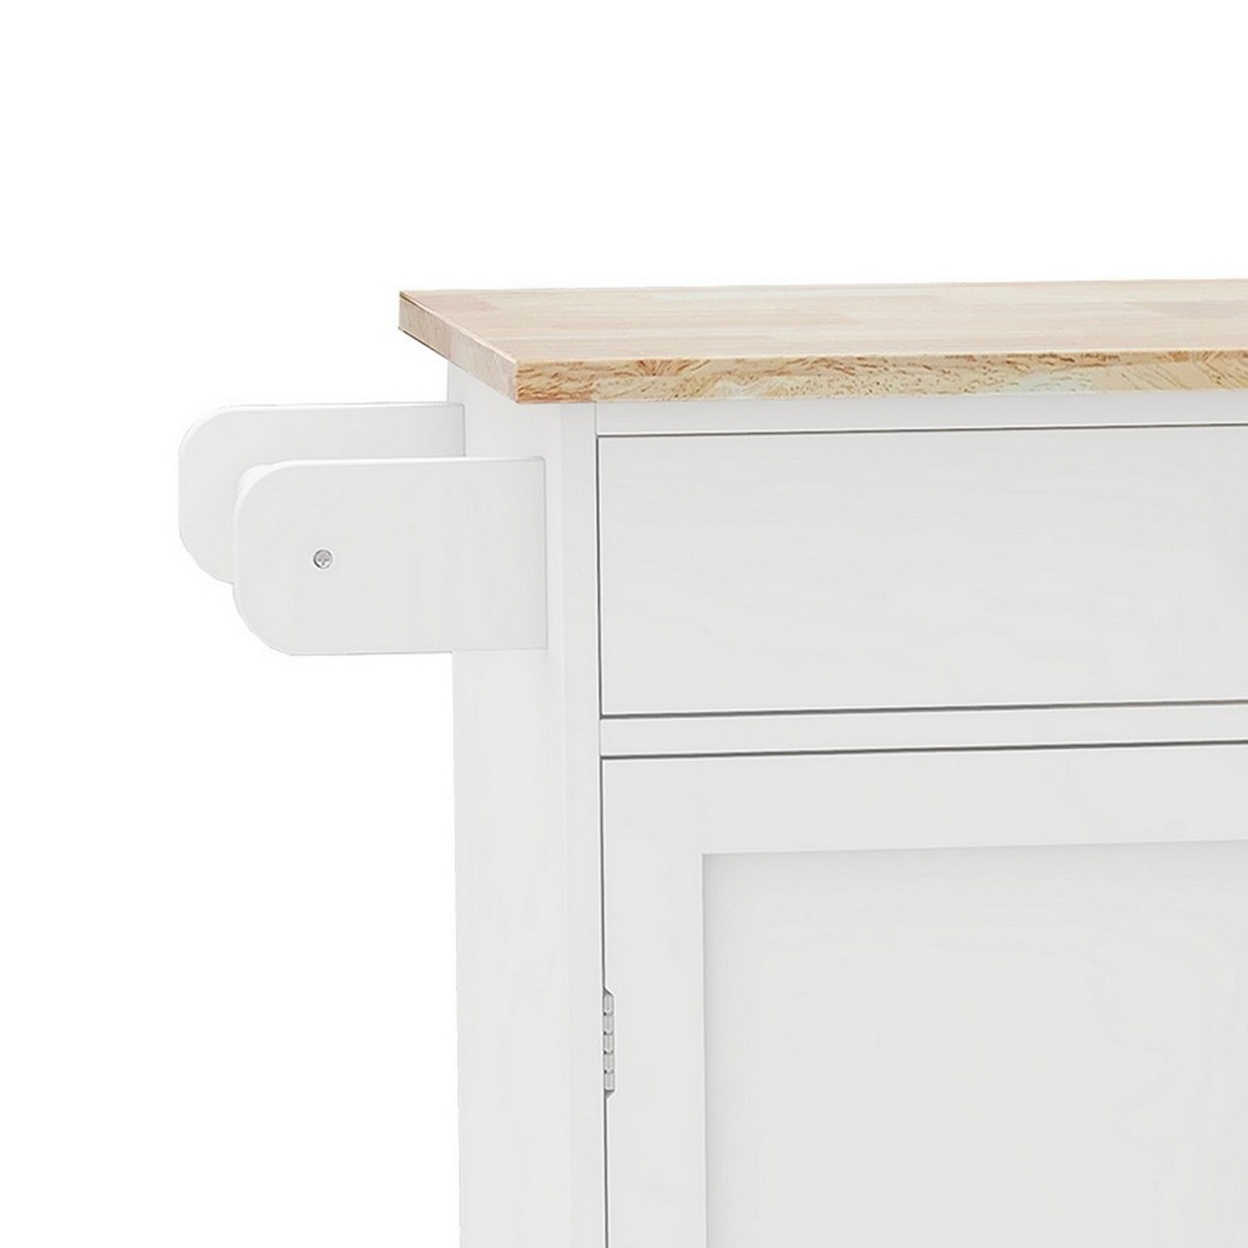 36 Inch Kitchen Islend With Towel Rack, 1 Double Door Cabinet, White Wood- Saltoro Sherpi